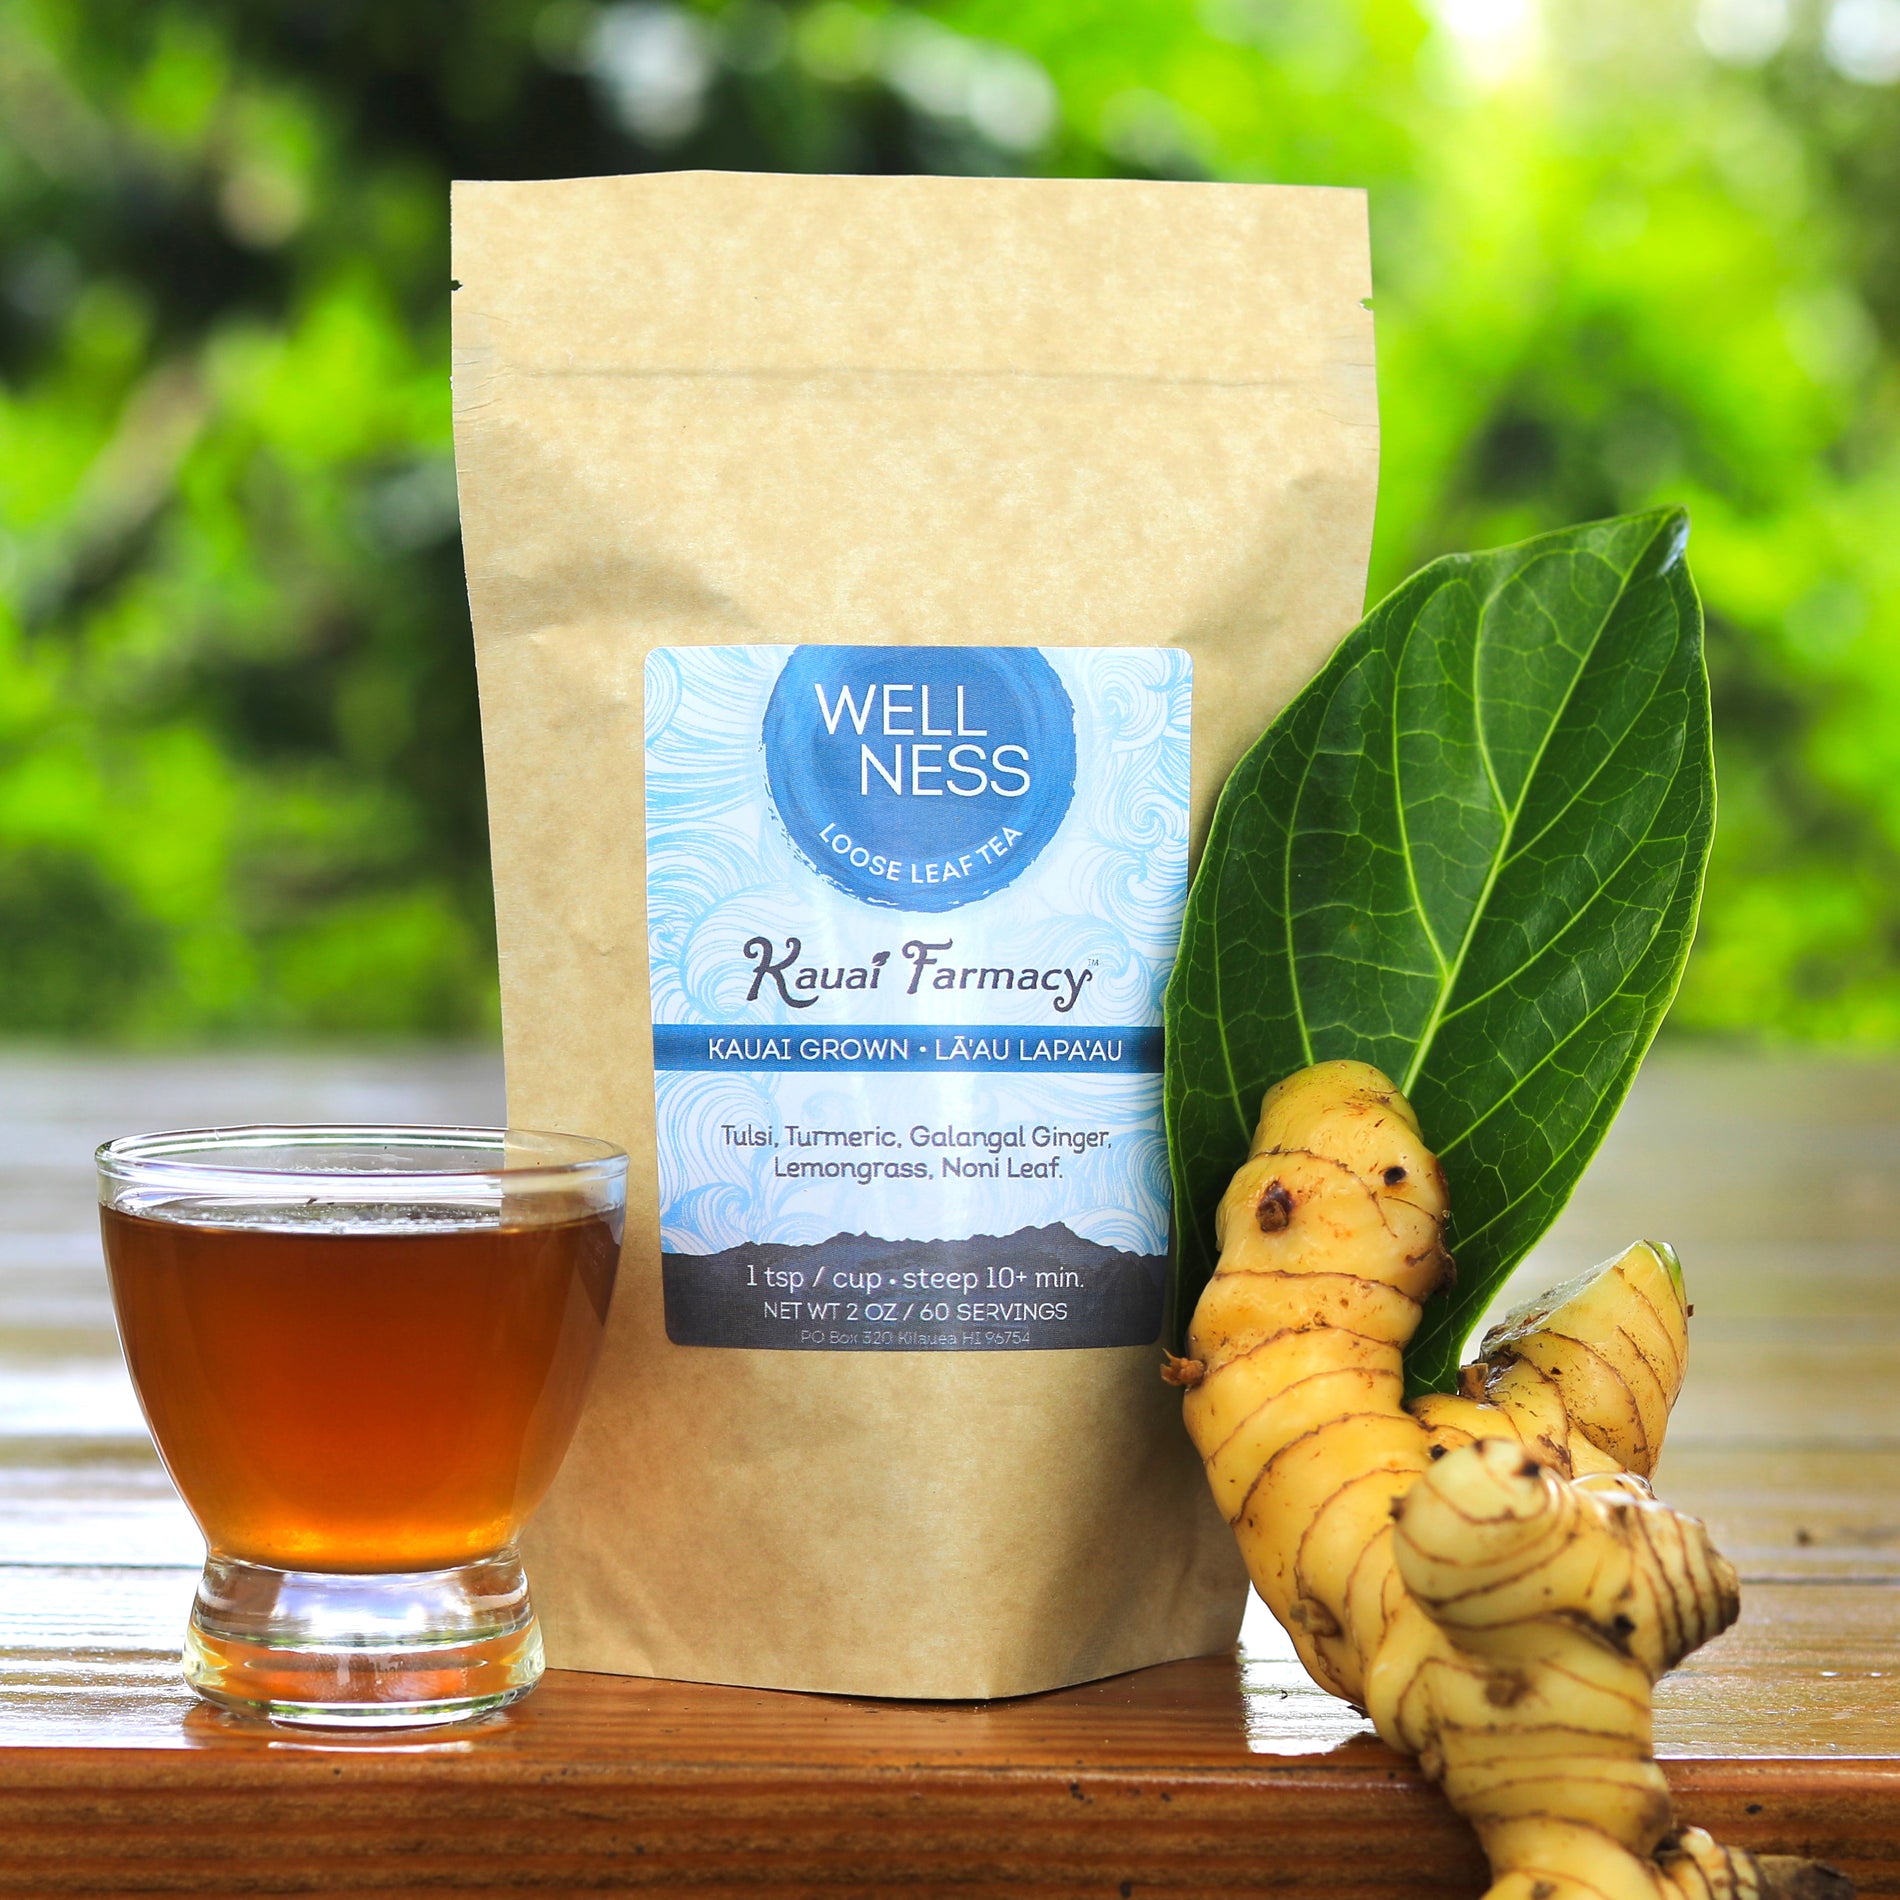 Puritea - Cleansing detox herbal tea organically made in Hawaii - Kauai ...